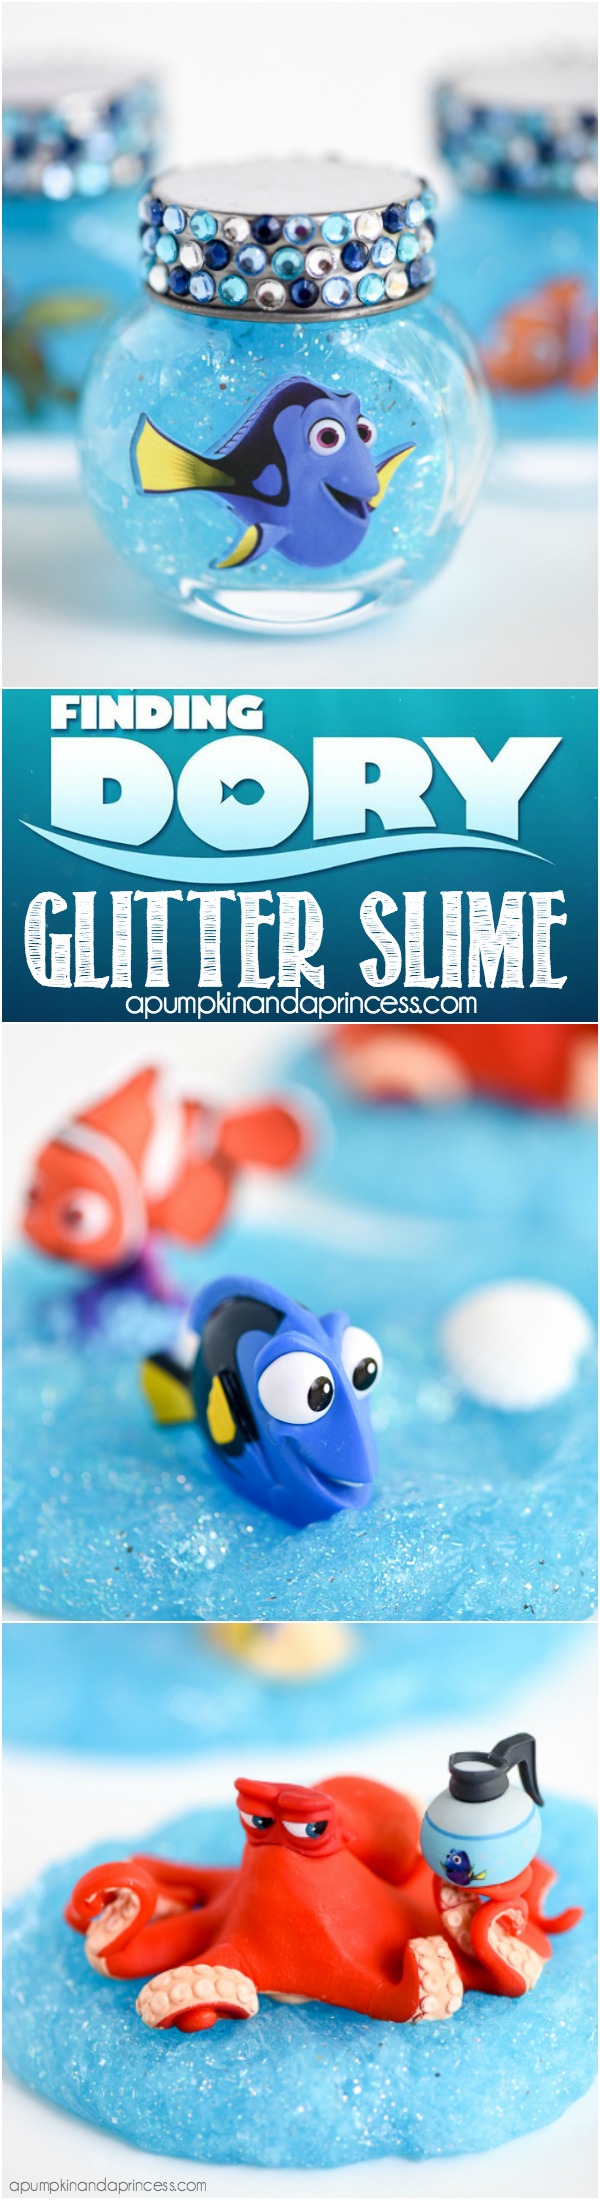 Finding Dory Glitter Slime - create this easy glitter slime recipe as a Finding Dory party favor or summer boredom-buster idea for kids!